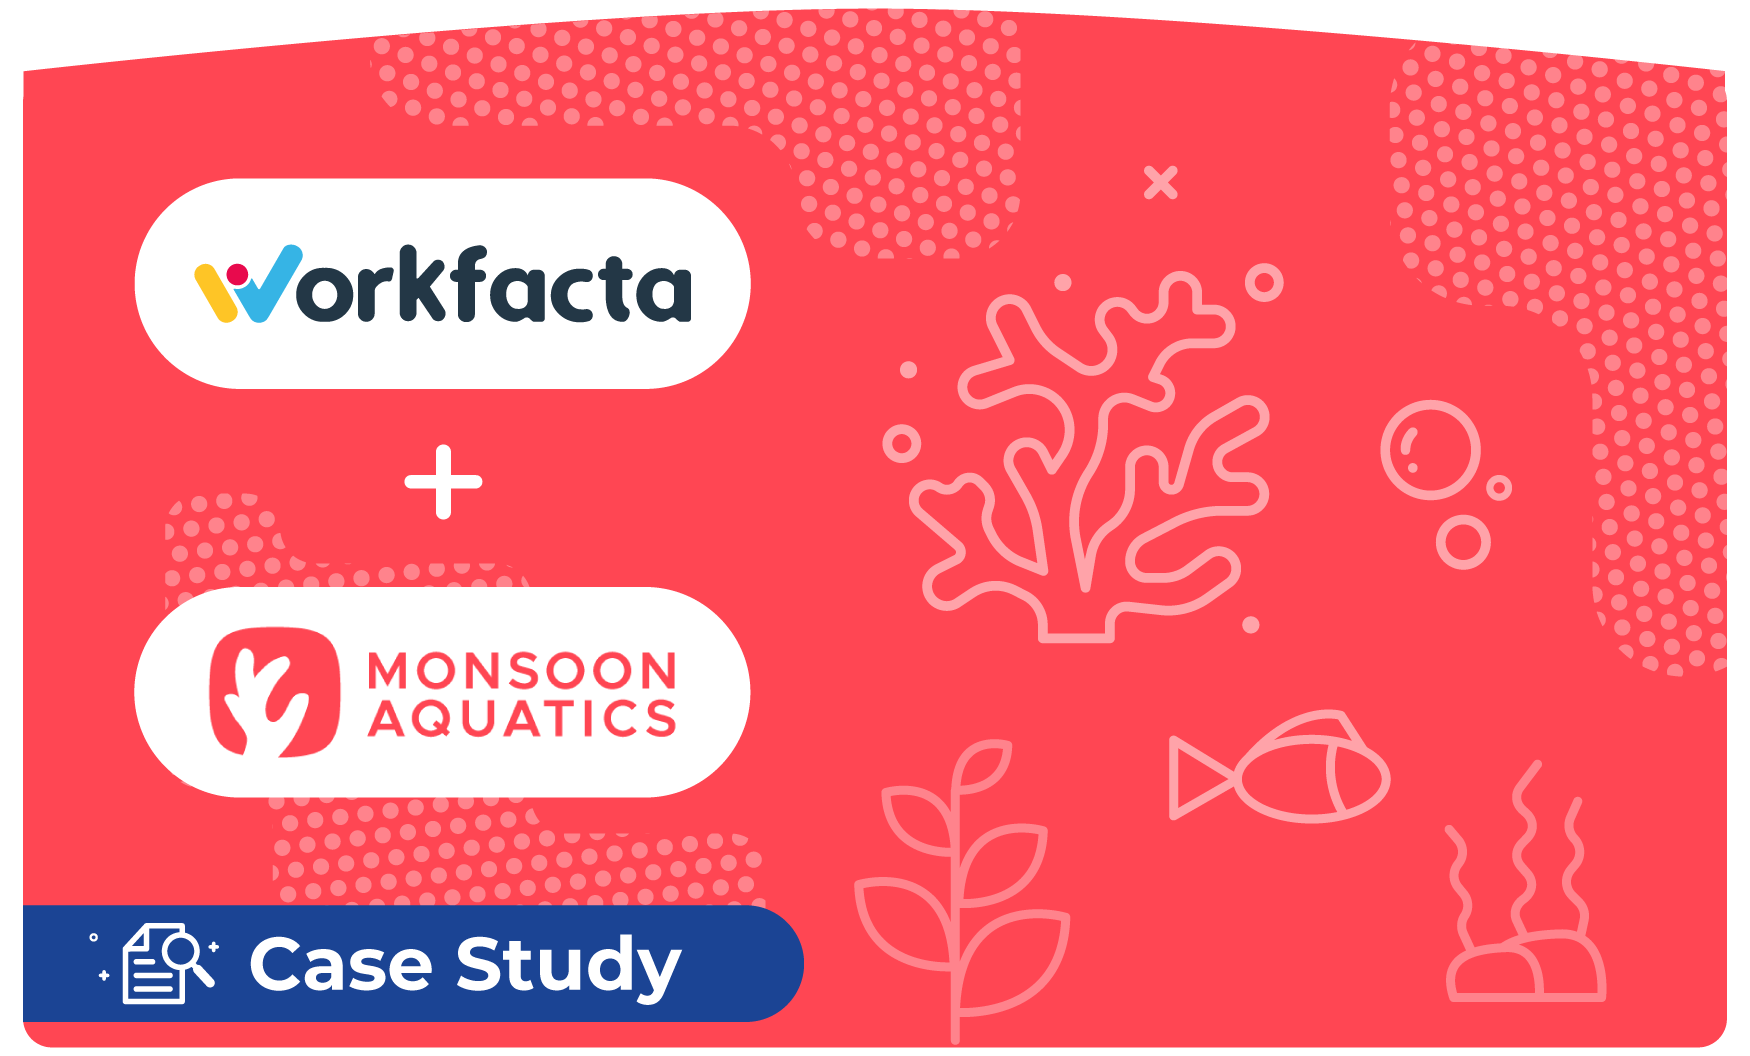 Monsoon Aquatics - Workfacta case study banner